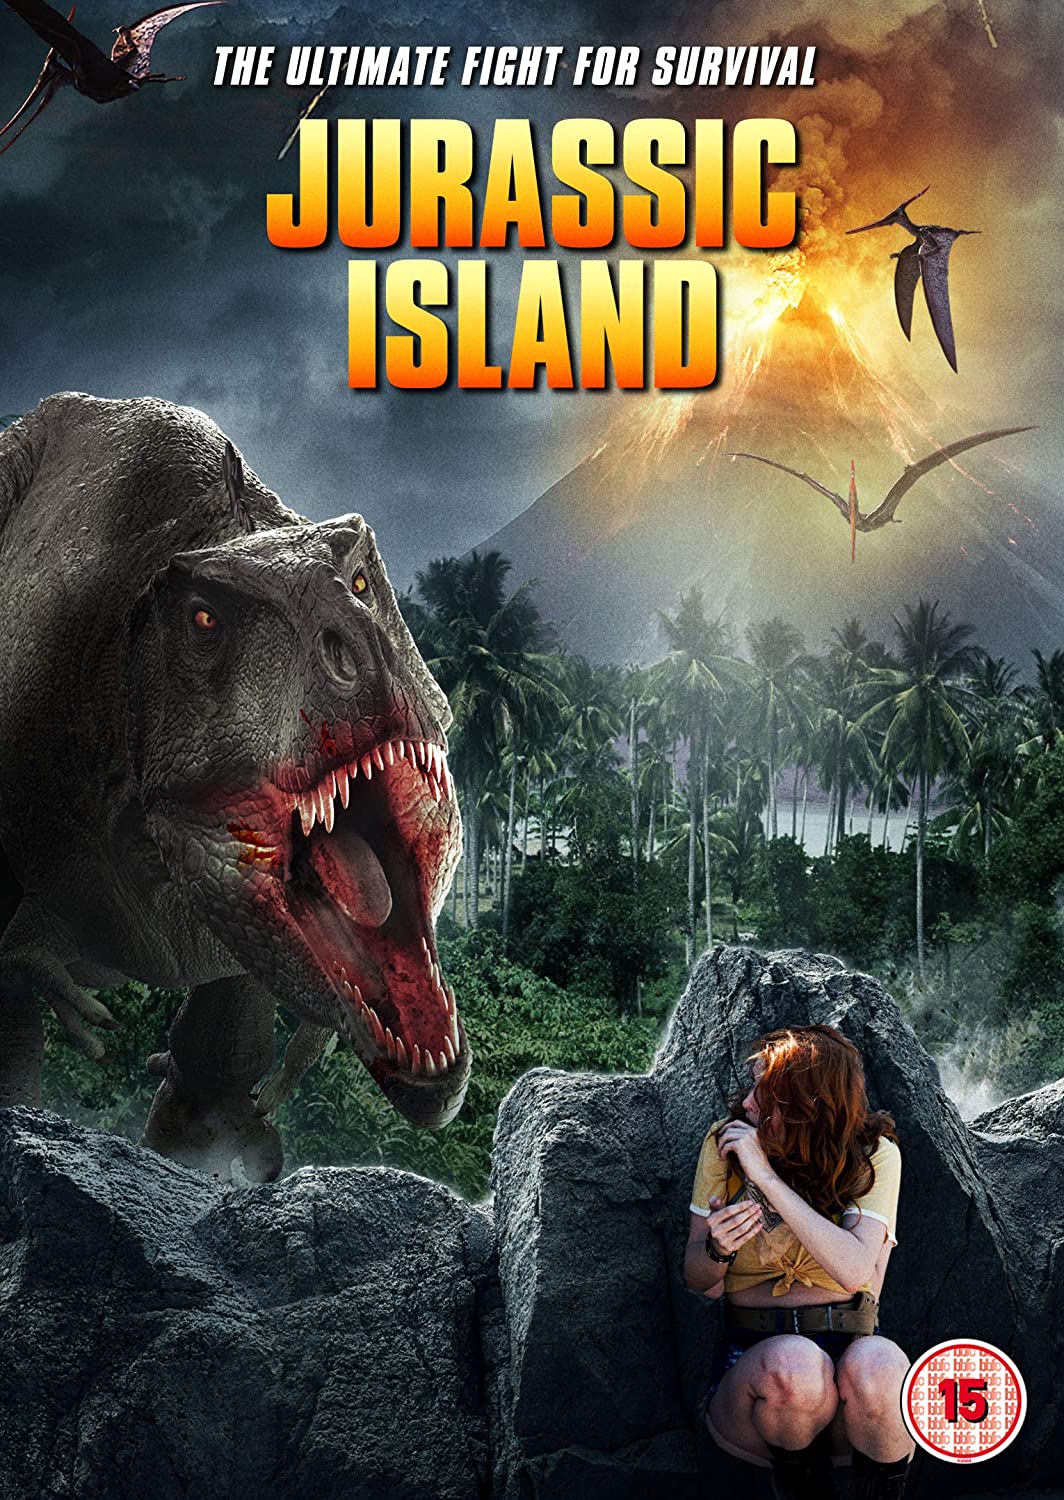 Jurassic Island - Adventure [DVD]